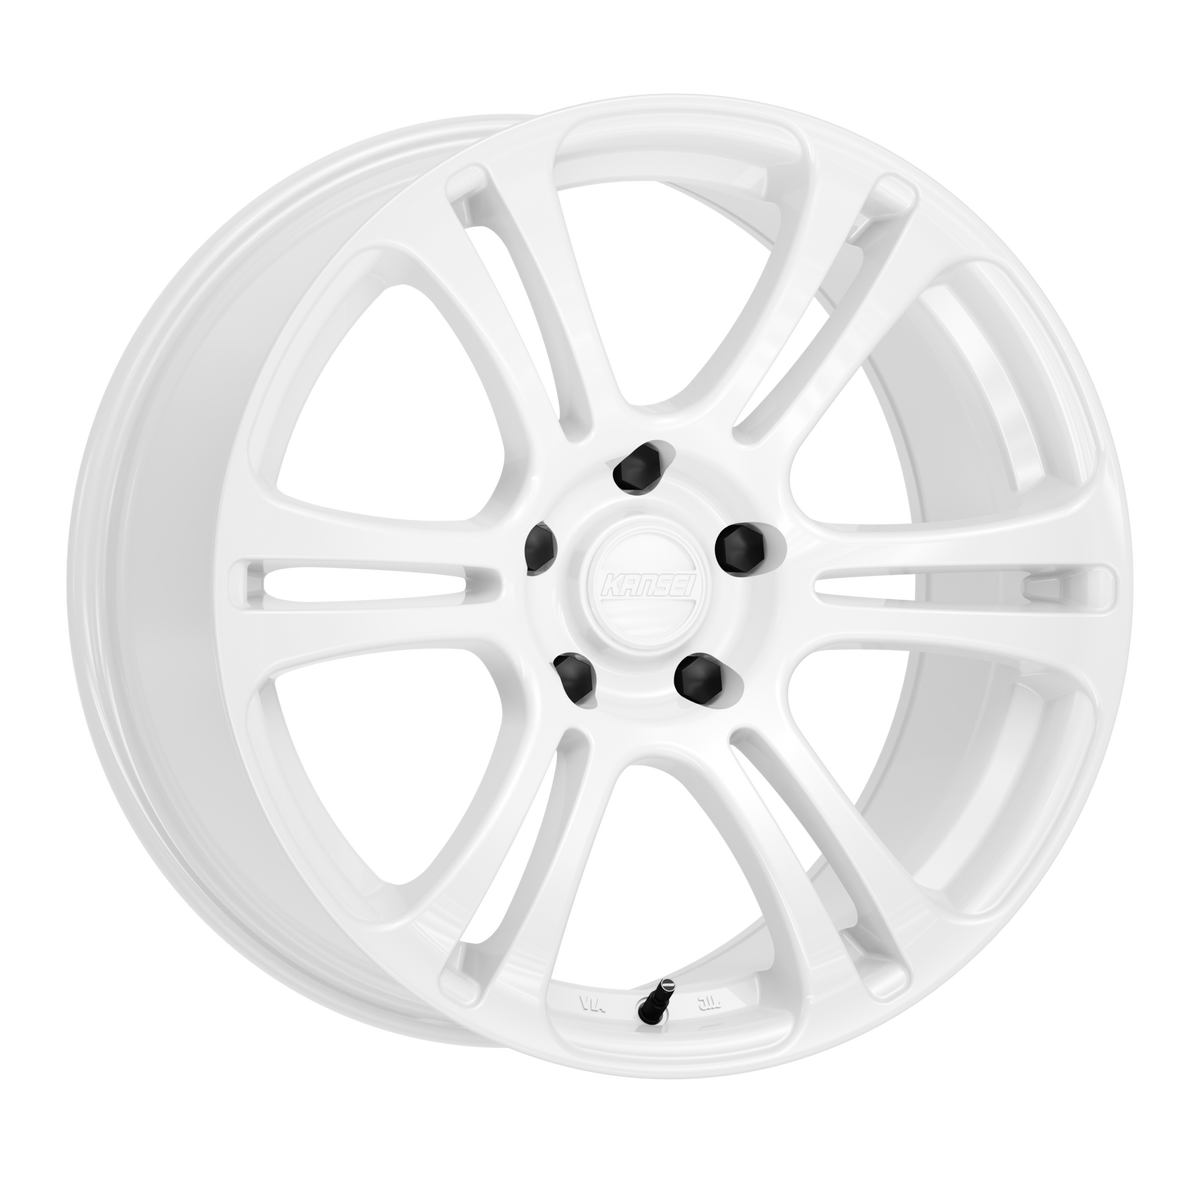 K16W NEO Wheel, Size: 18" x 9", Bolt Pattern: 5 x 114.300 mm, Backspace: 5.87" [Finish: Gloss White]